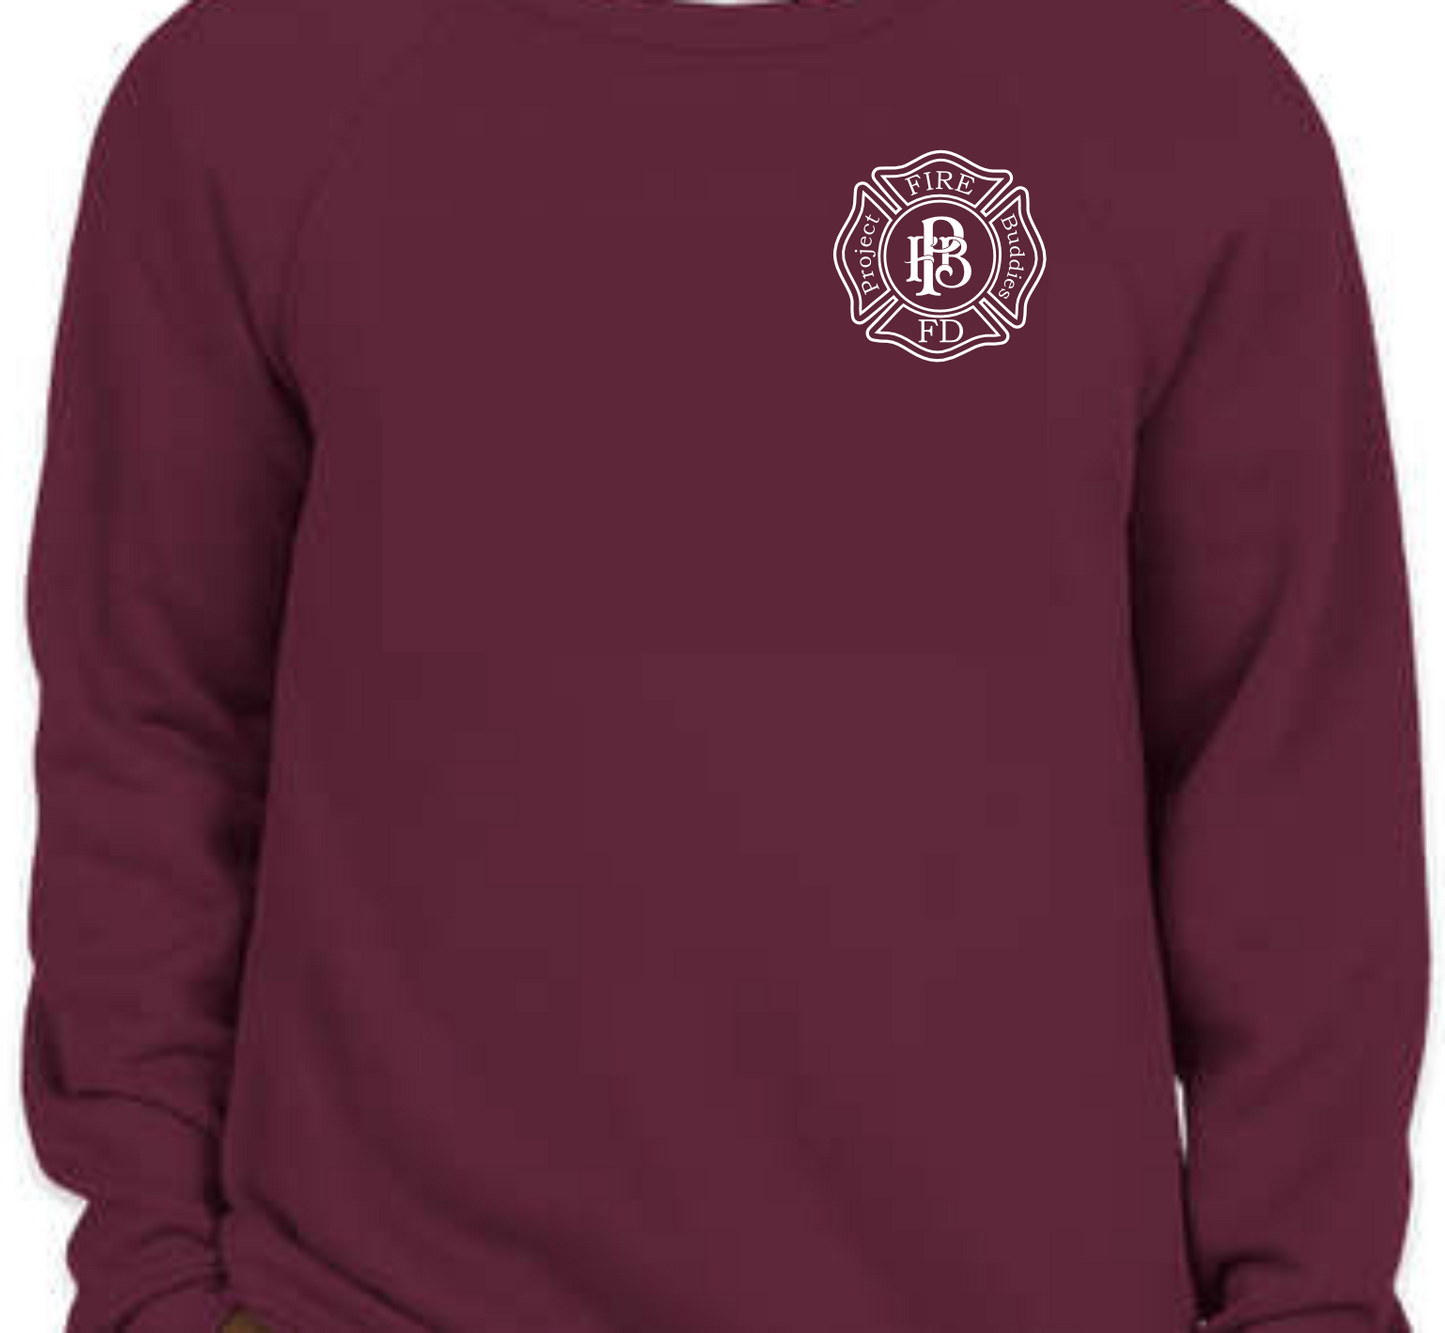 PFB Crewneck Sweatshirt